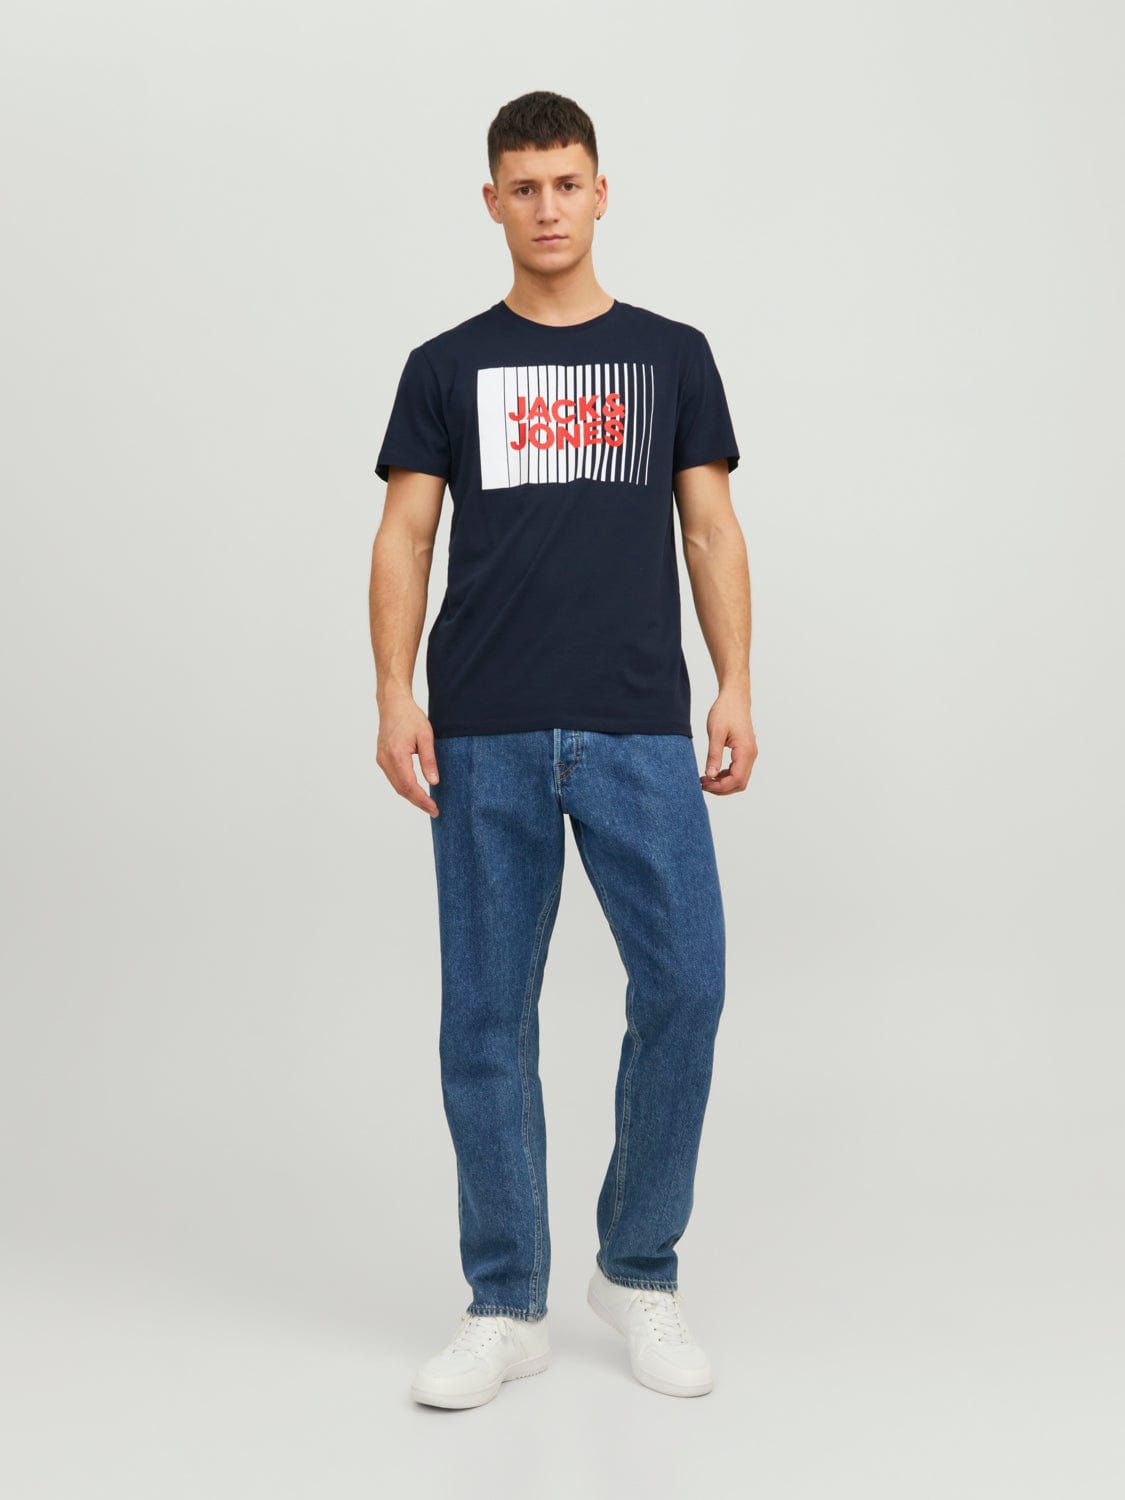 Camiseta con logo - JJECORP T-Shirt Azul marino